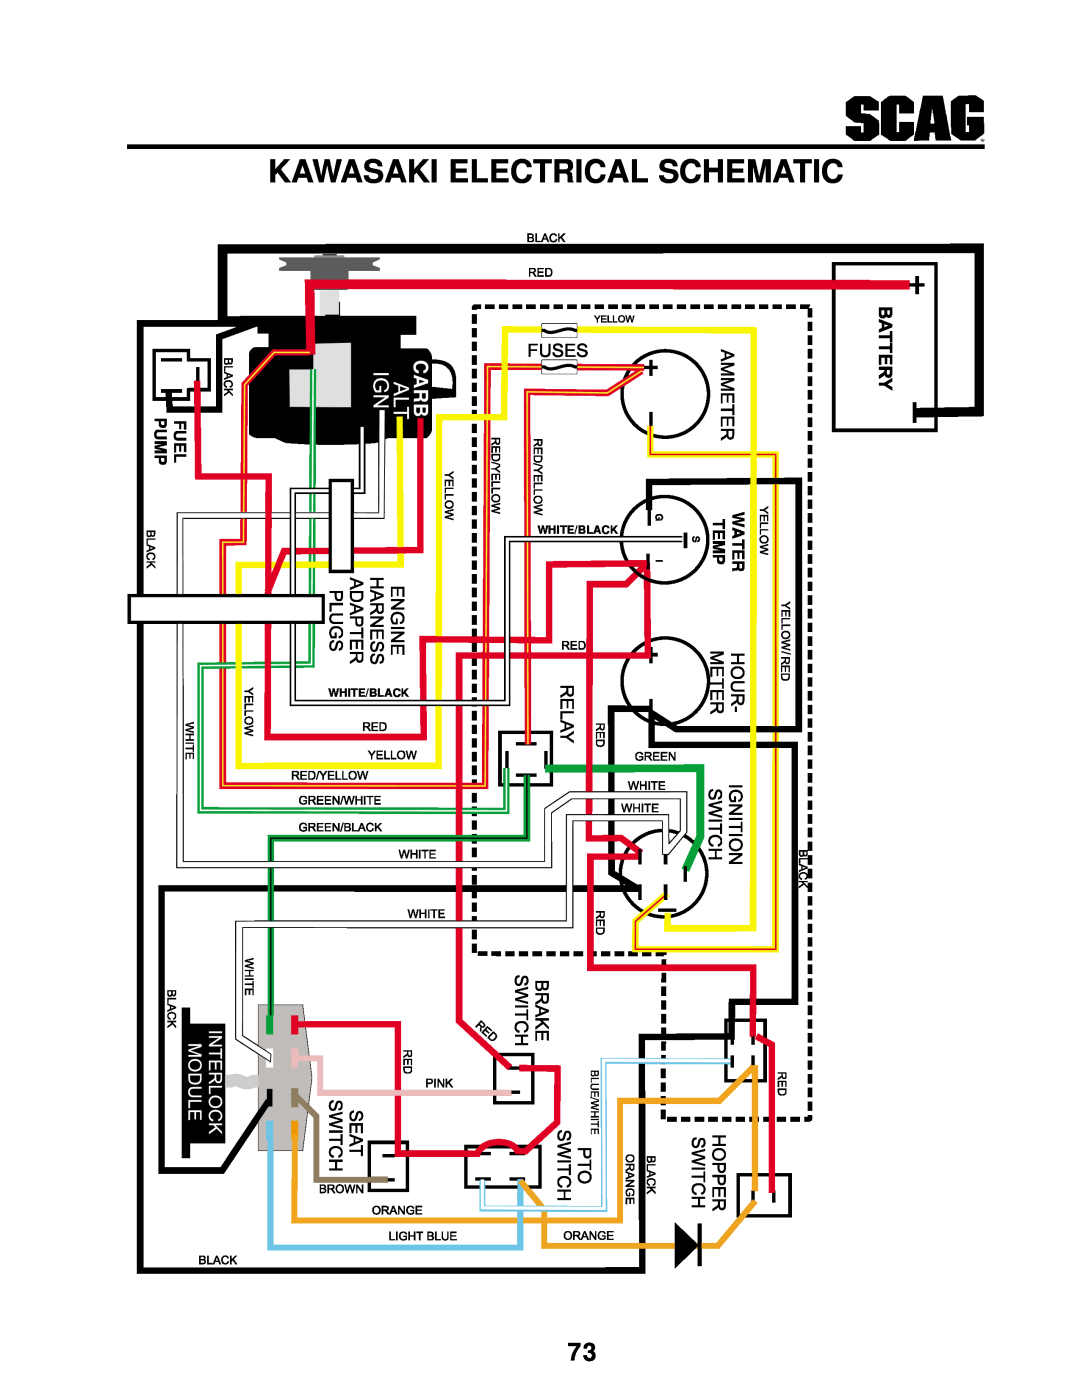 MB QUART SCR manual Kawasaki Electrical Schematic, Carb, Blue/White, G White/Black I, Fuel 